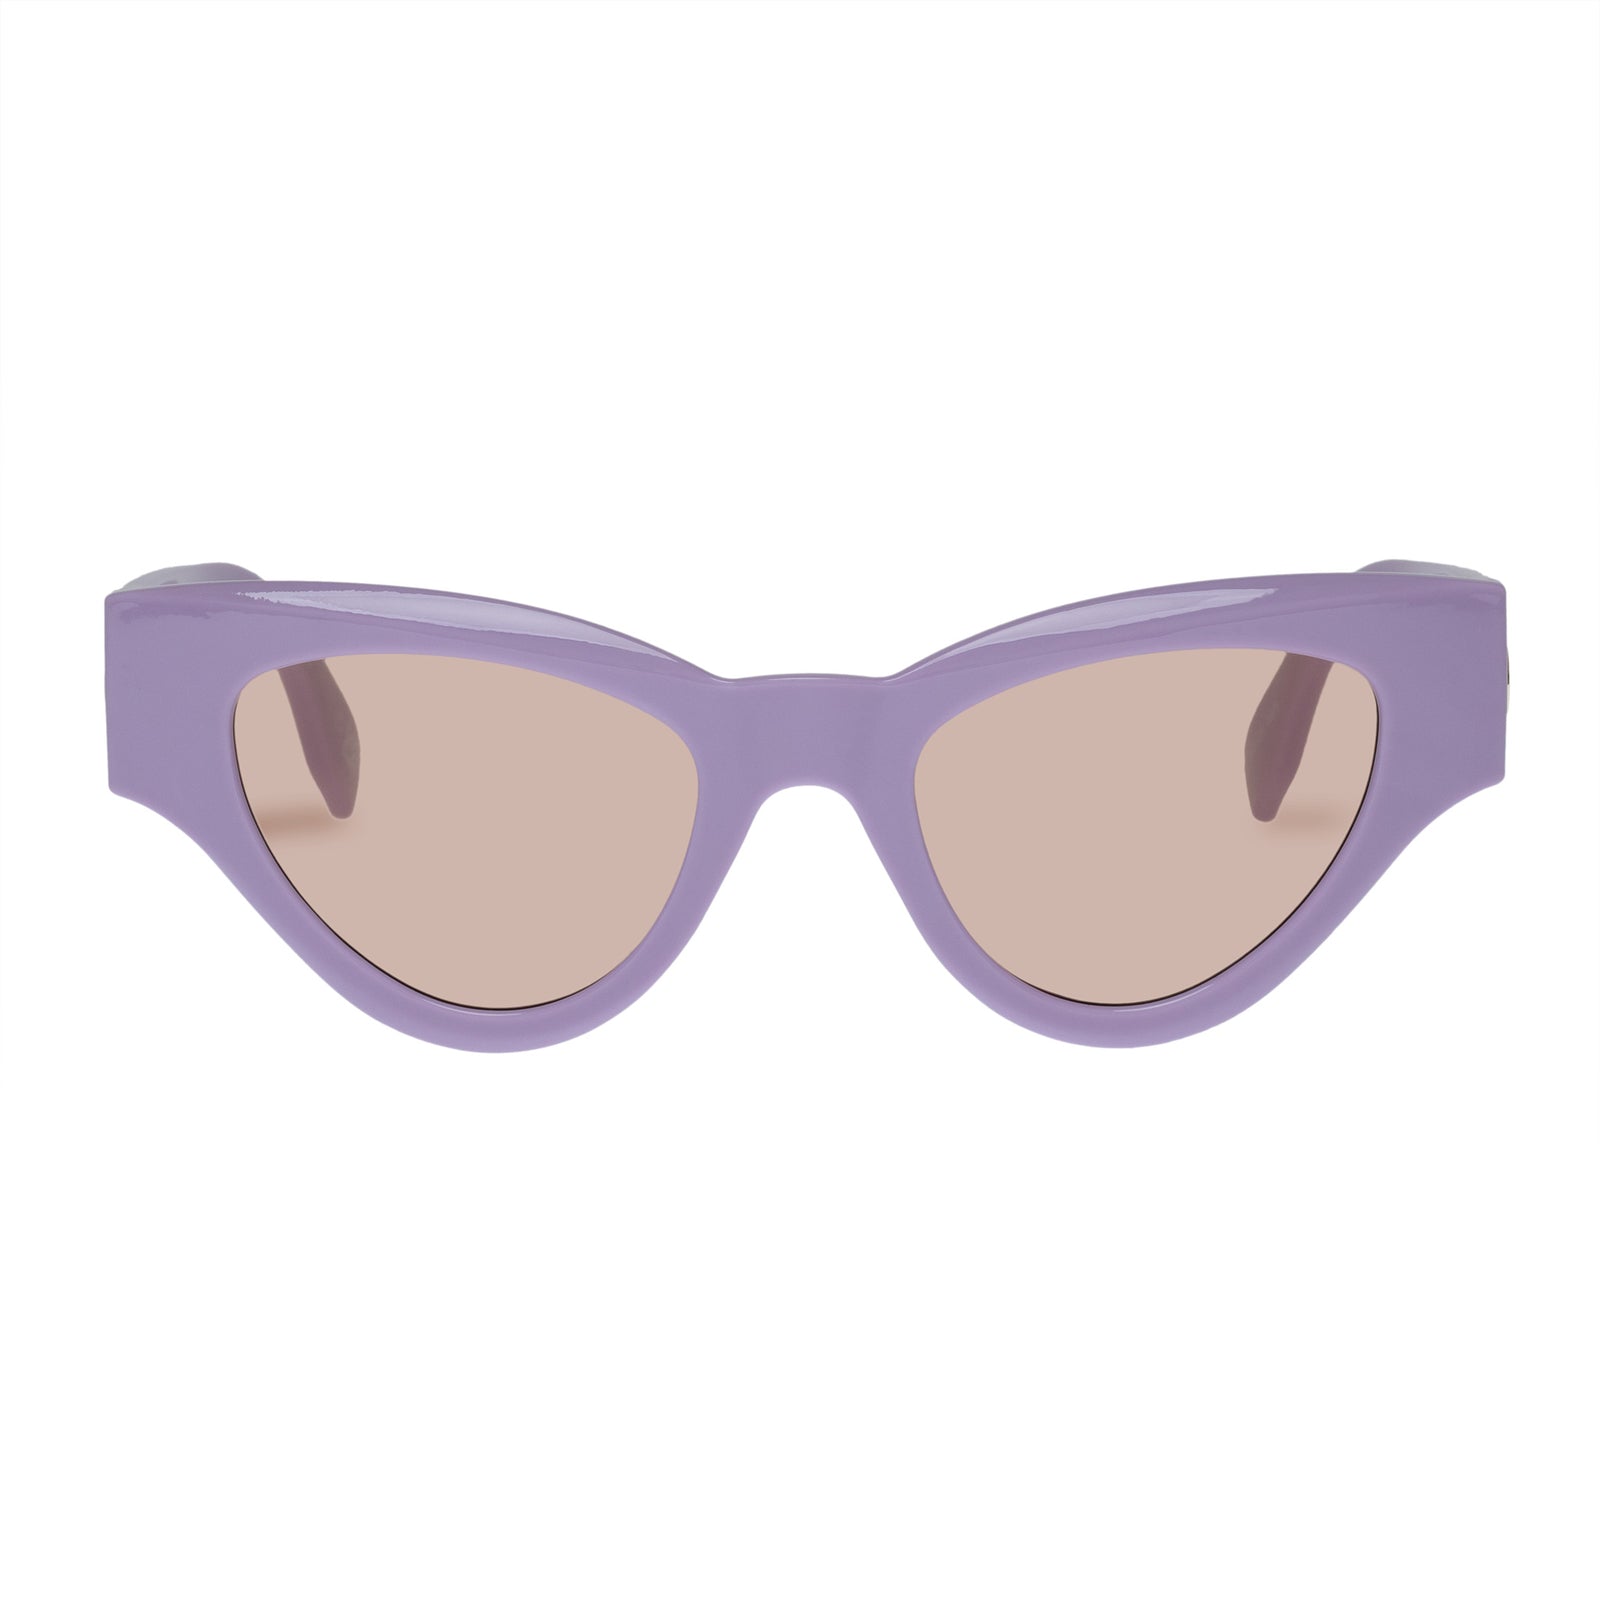 Fanplastico Orchid Women's Cat-Eye Sunglasses | Le Specs